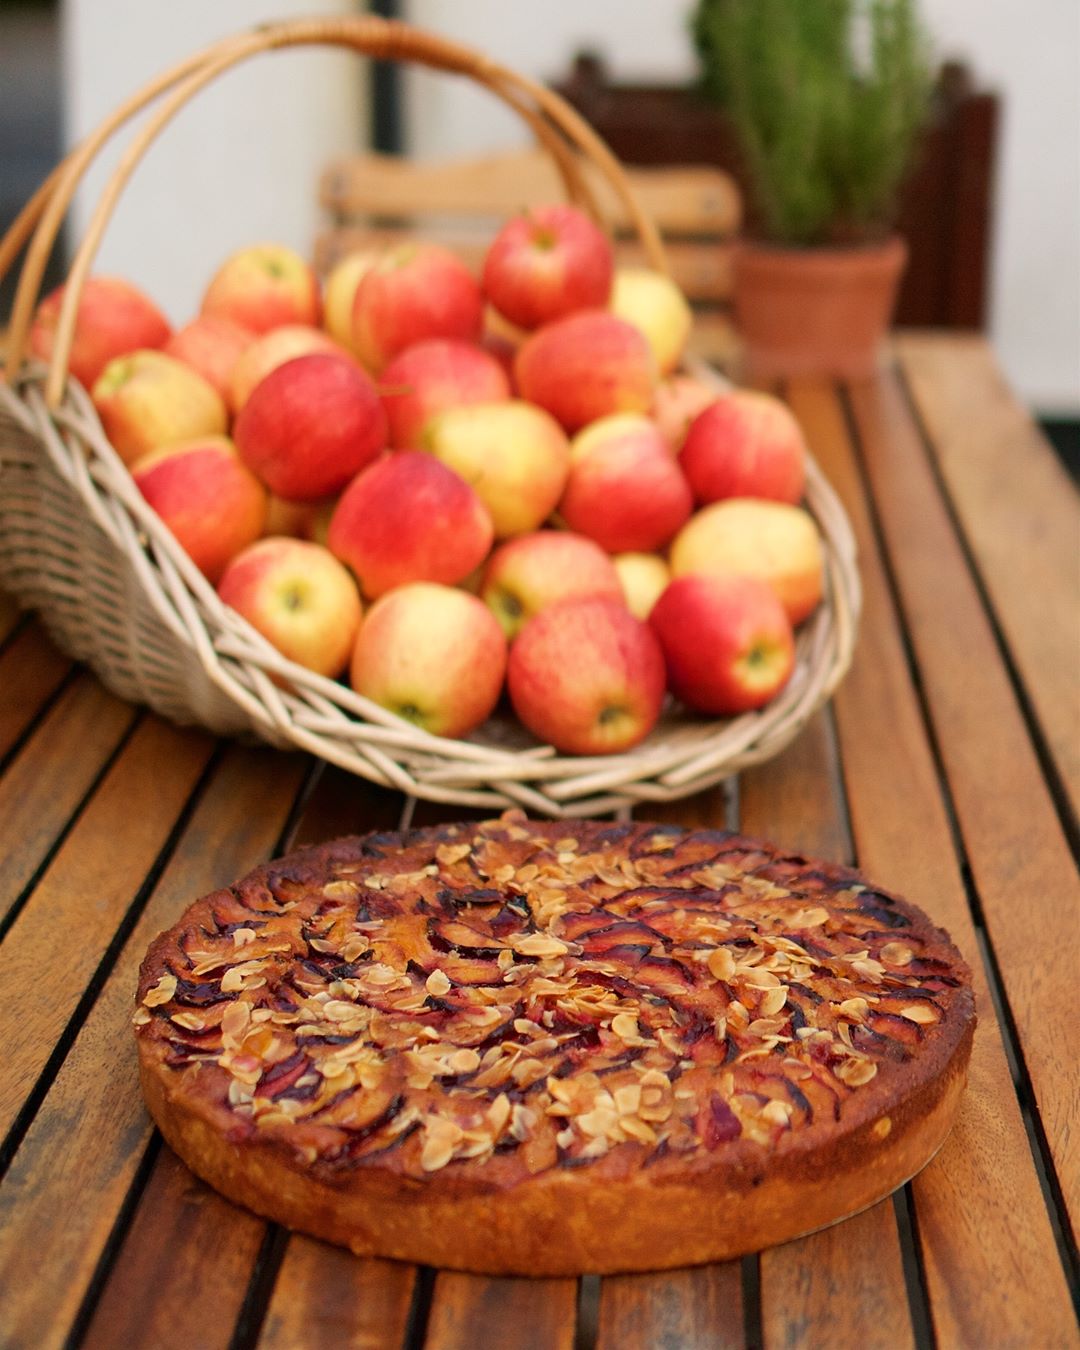 phoenix-cafe-homemade-tart-apple-pecan